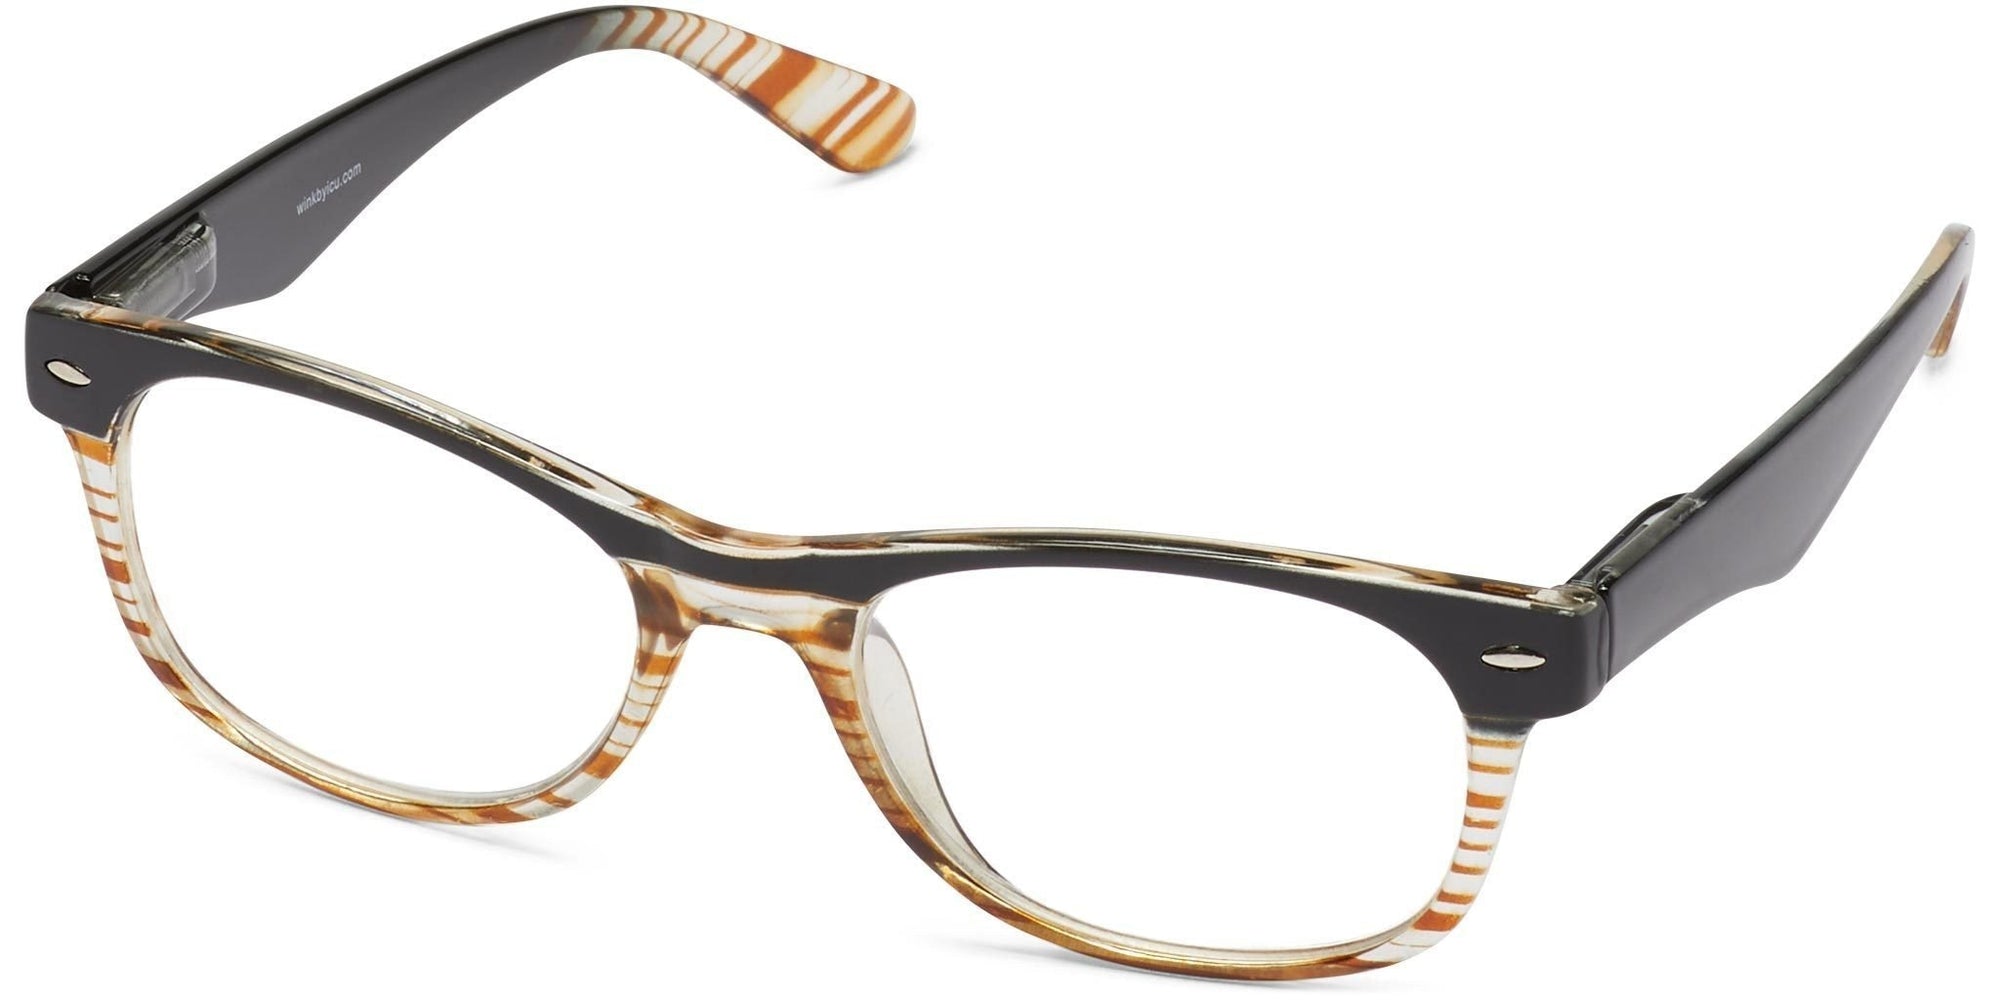 Austin - Black and Brown / 1.25 - Reading Glasses